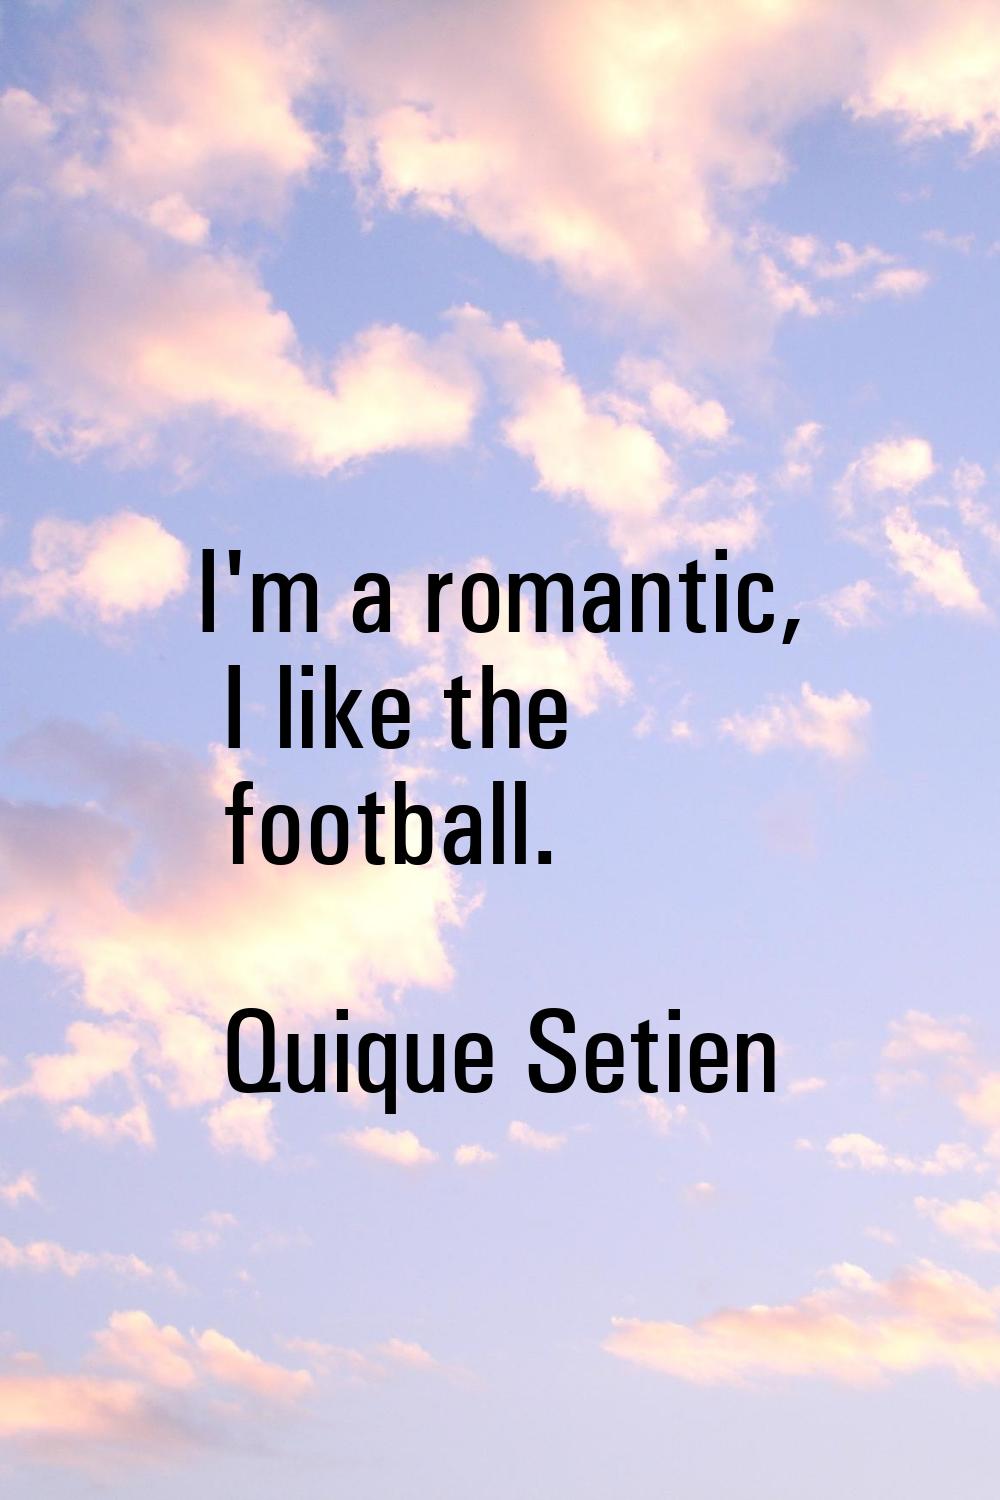 I'm a romantic, I like the football.